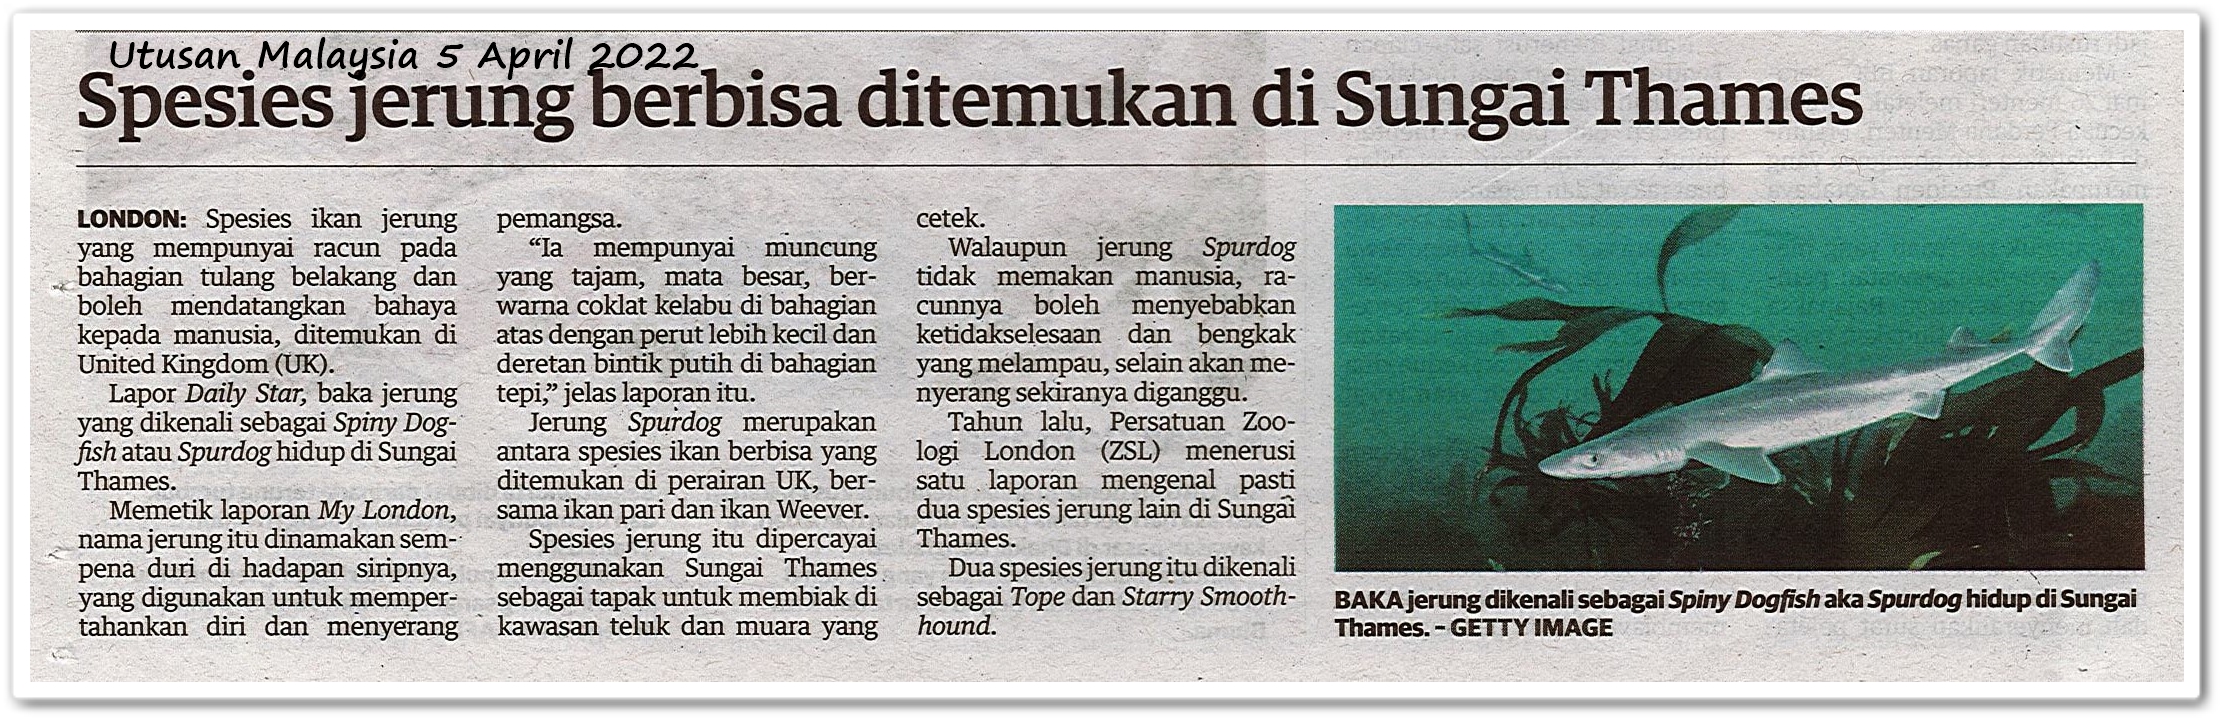 Spesies jerung berbisa ditemukan di Sungai Thames - Keratan akhbar Utusan Malaysia 5 April 2022